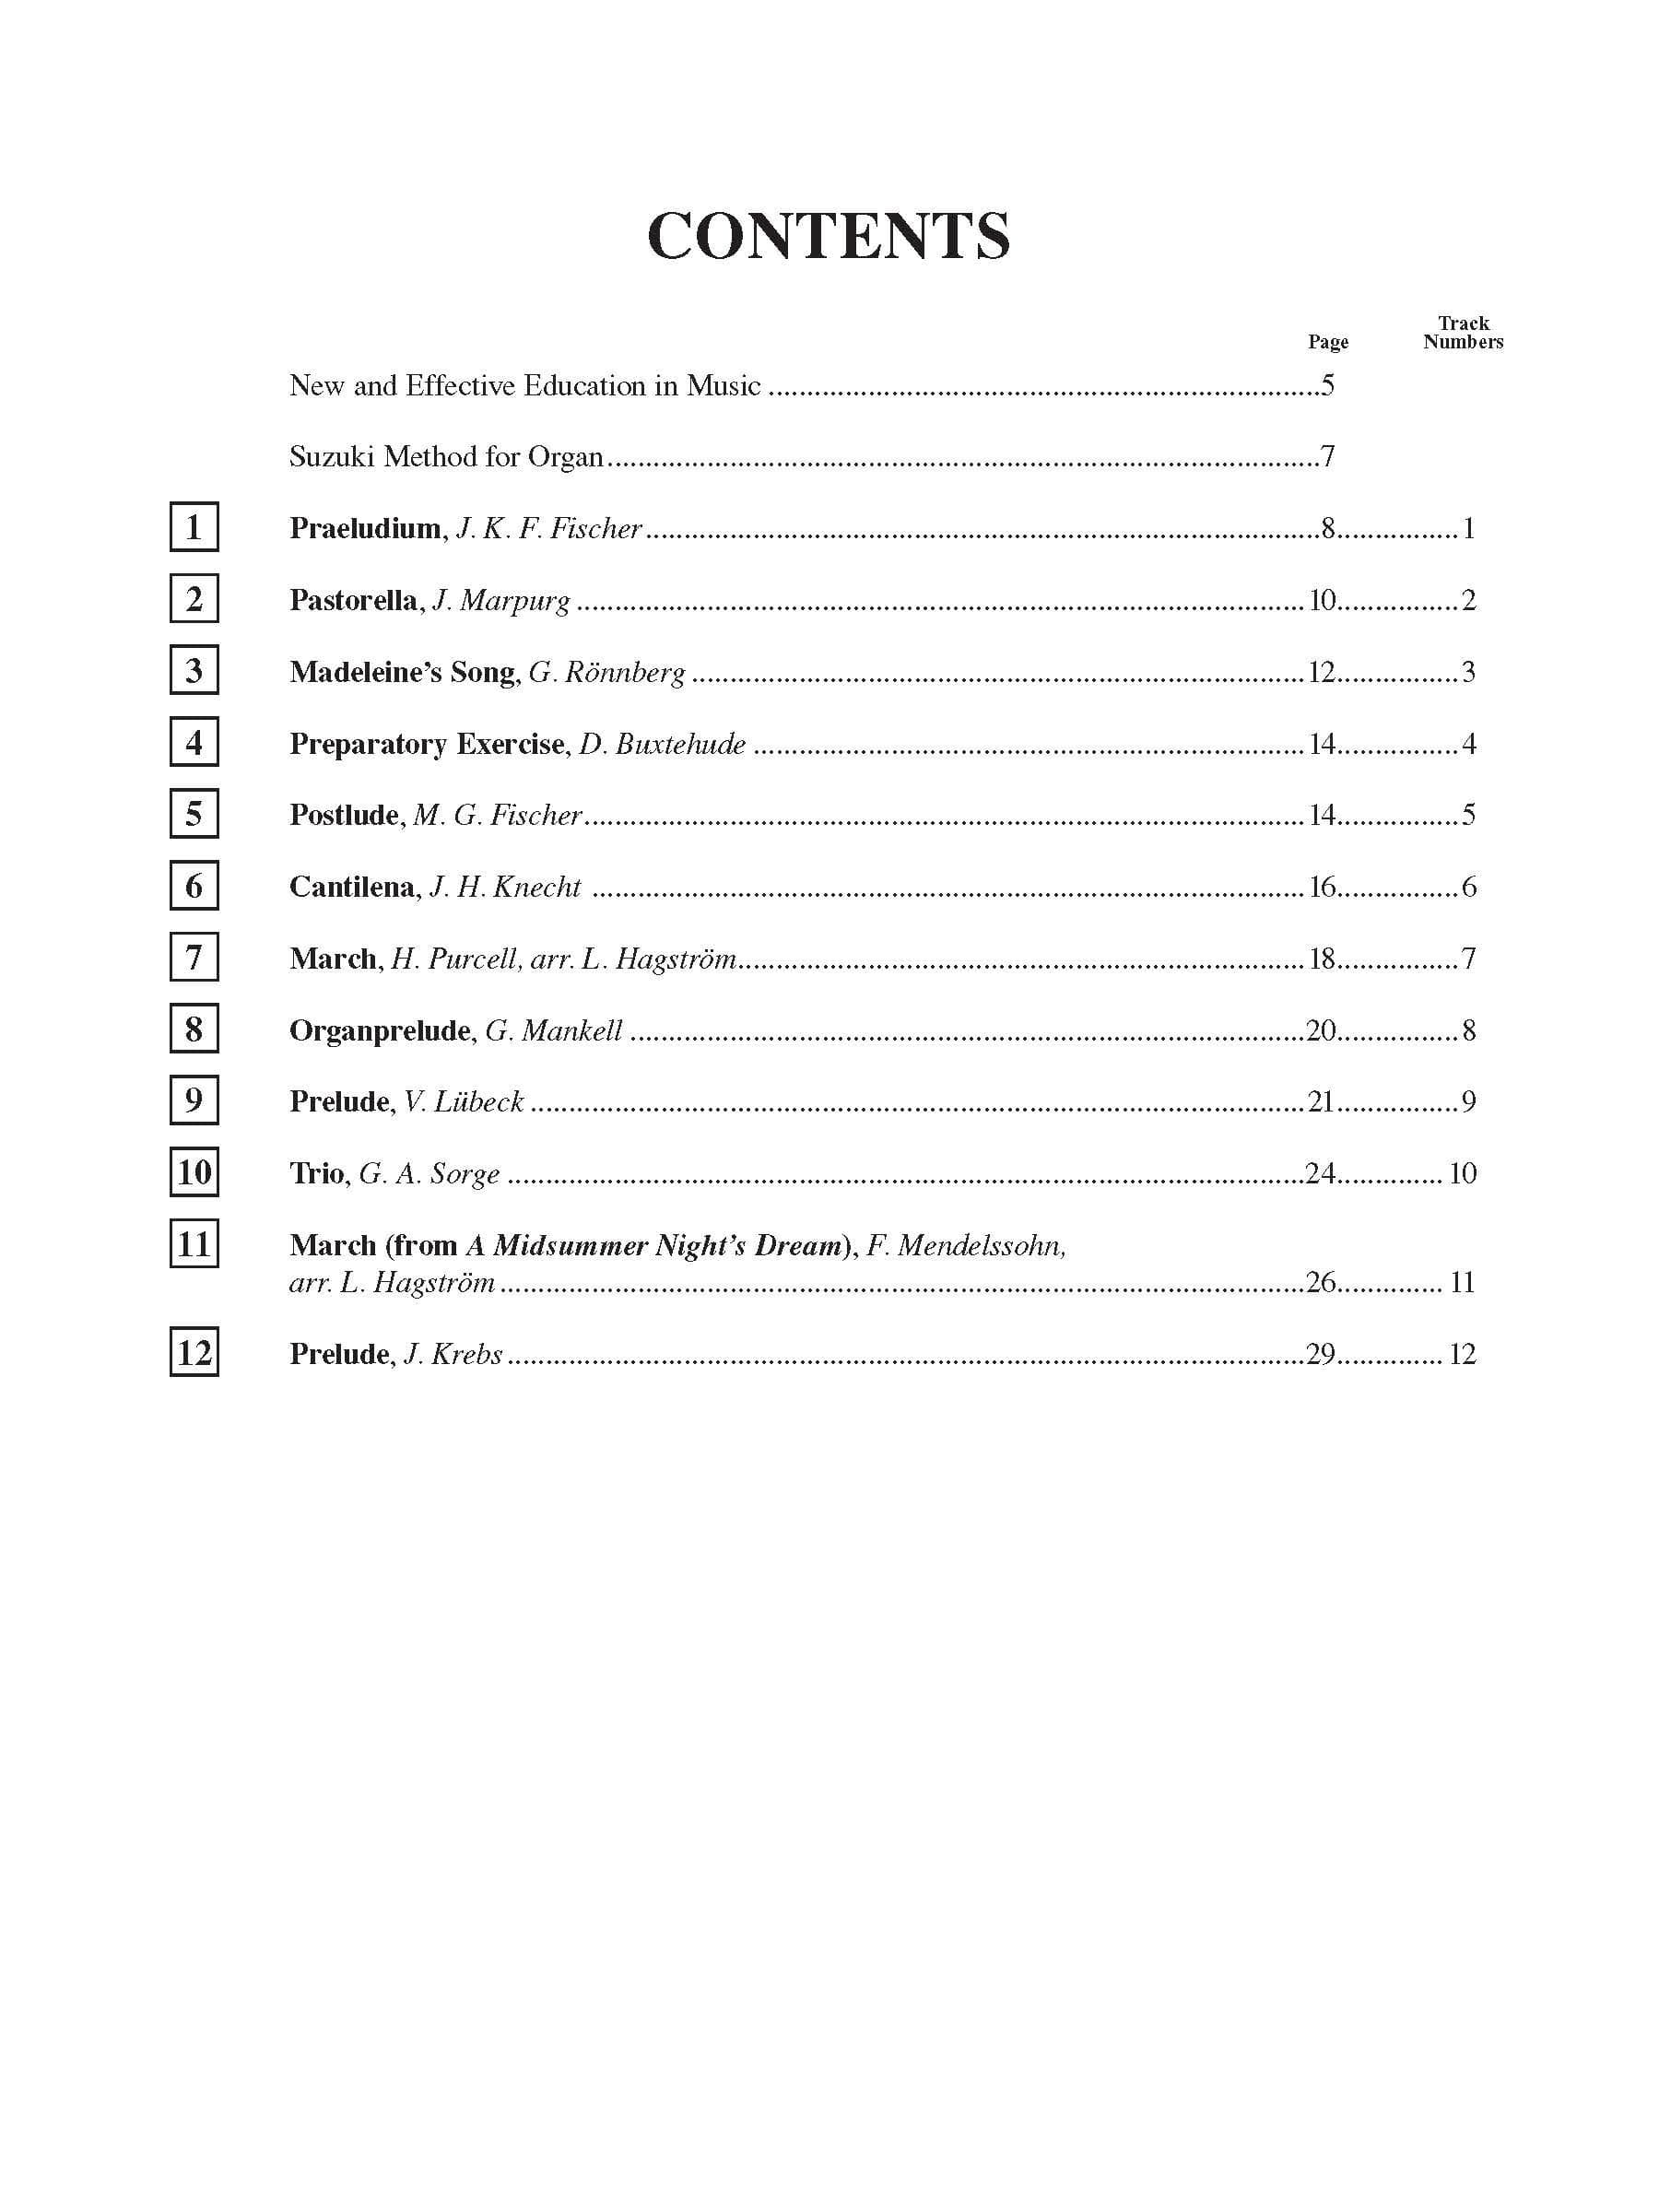 Suzuki Organ School Method Book and CD, Volume 5